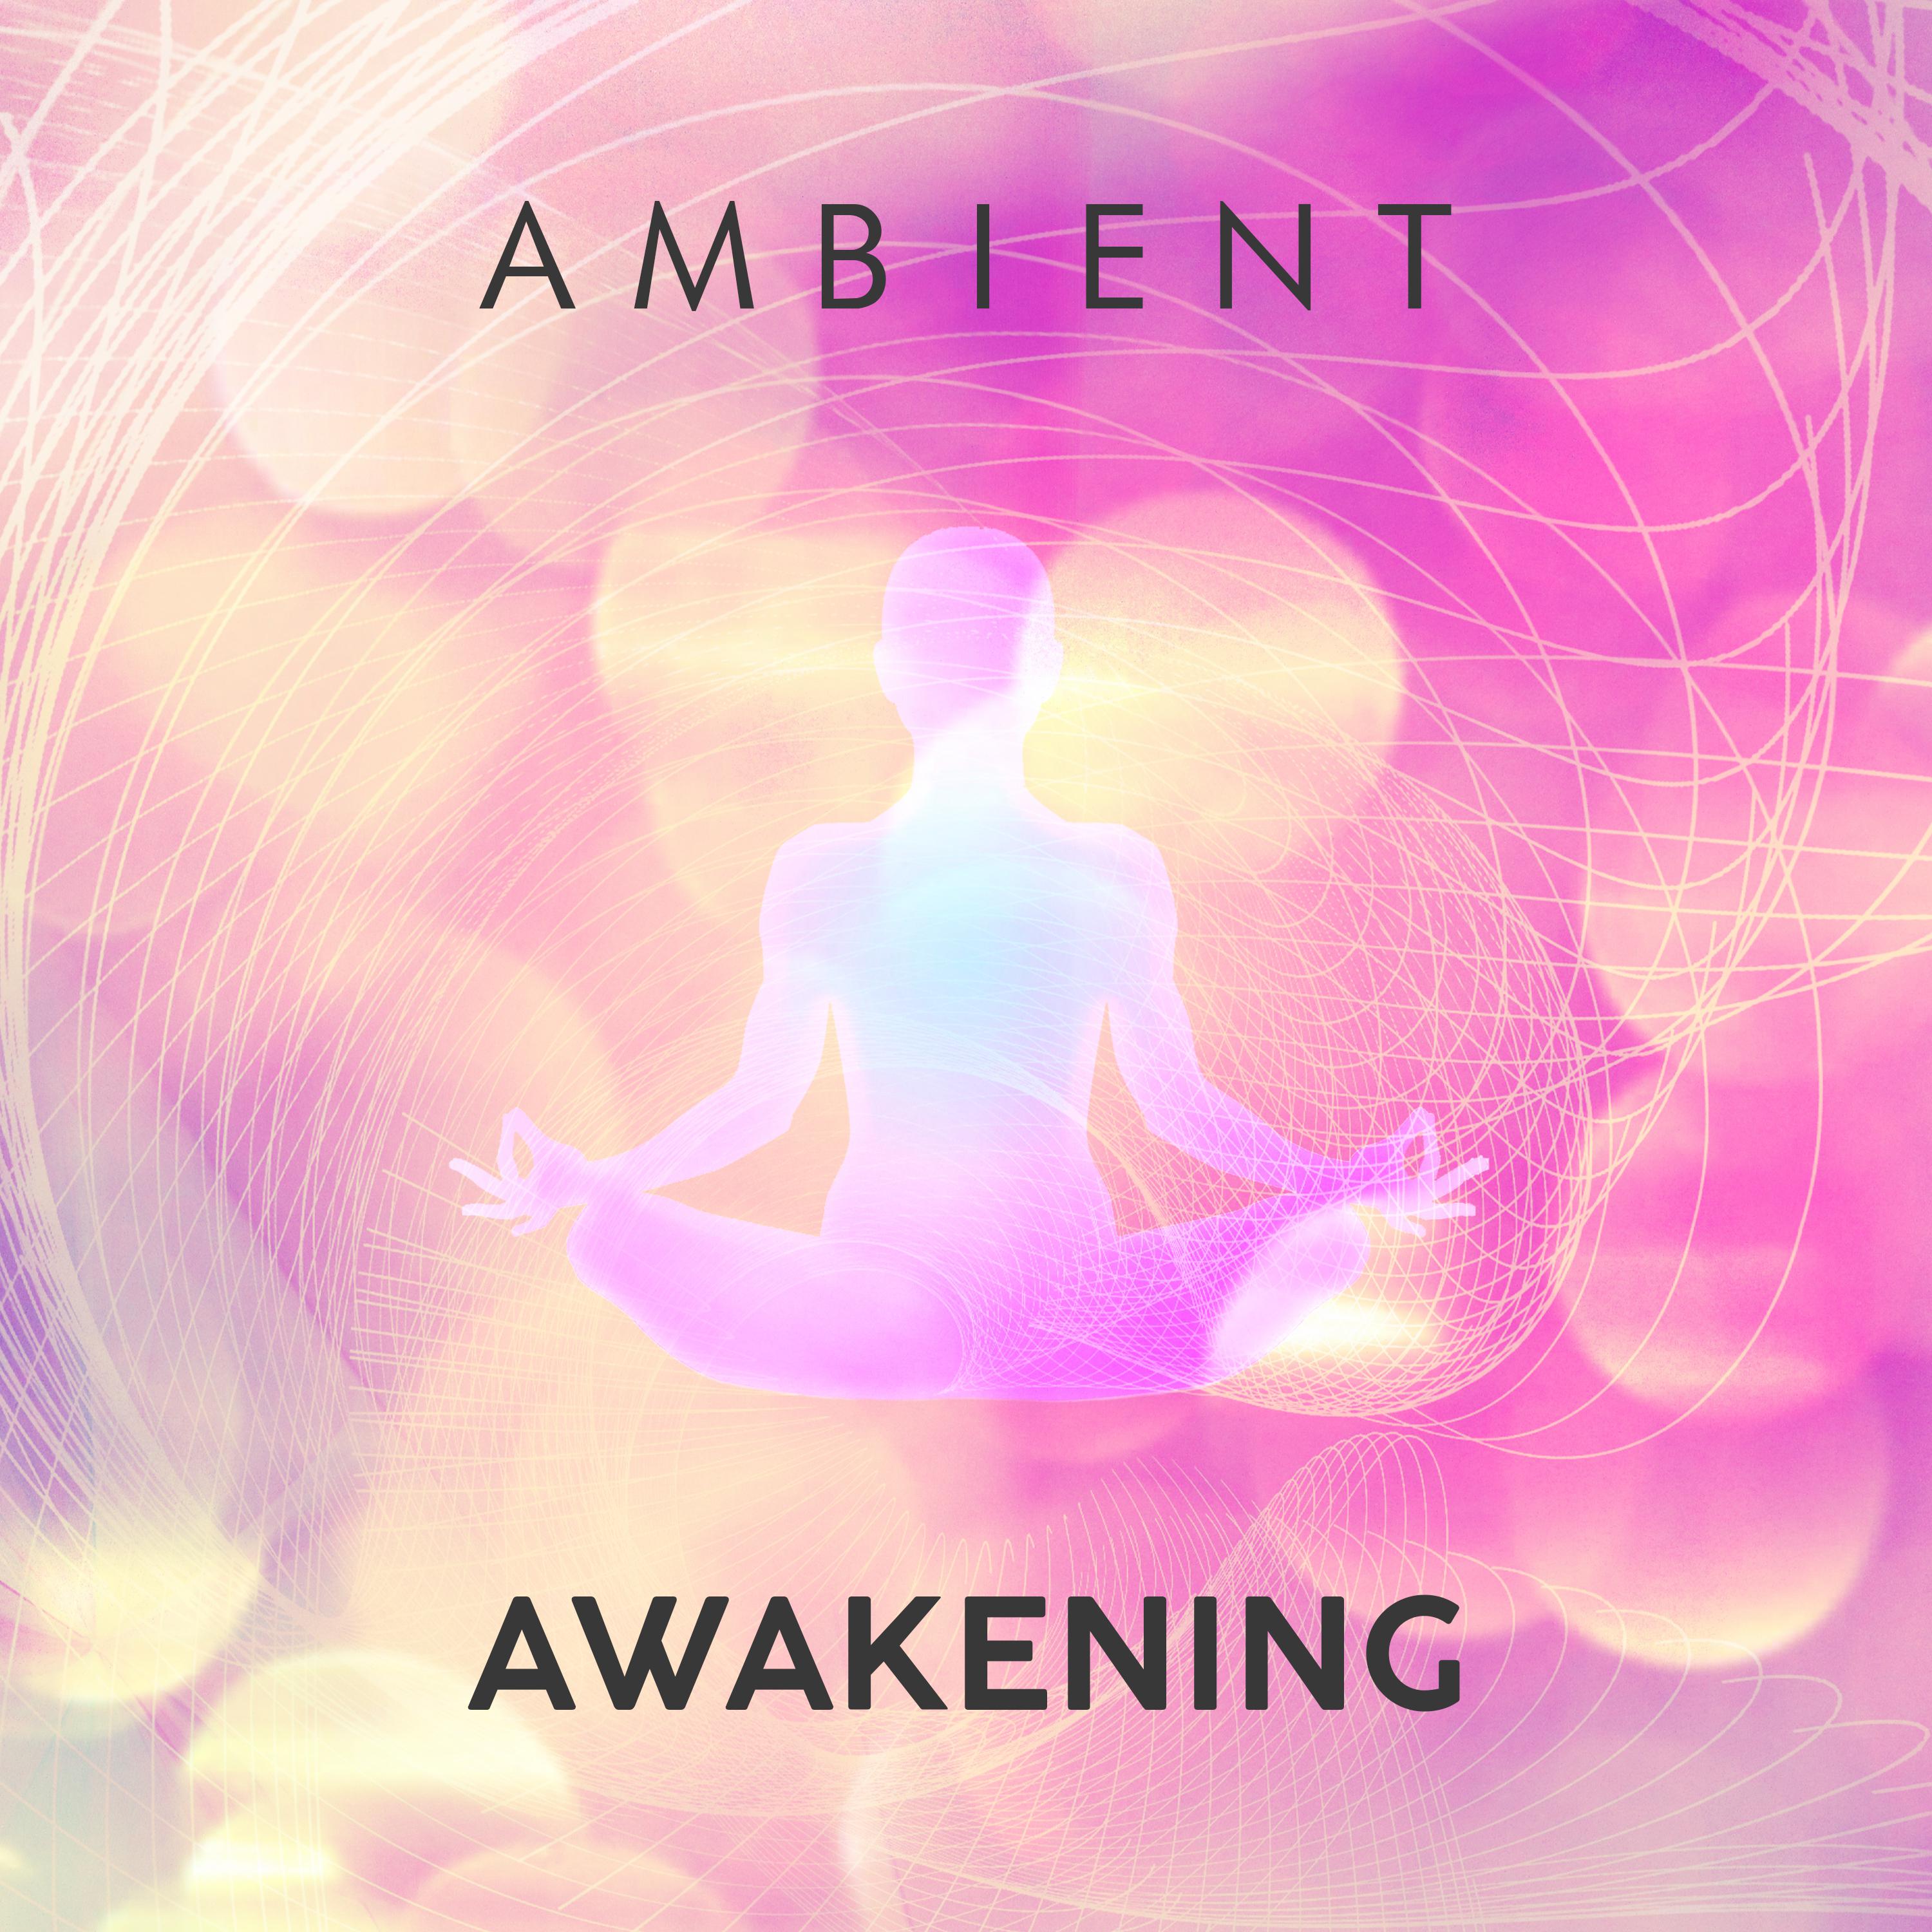 Ambient Awakening